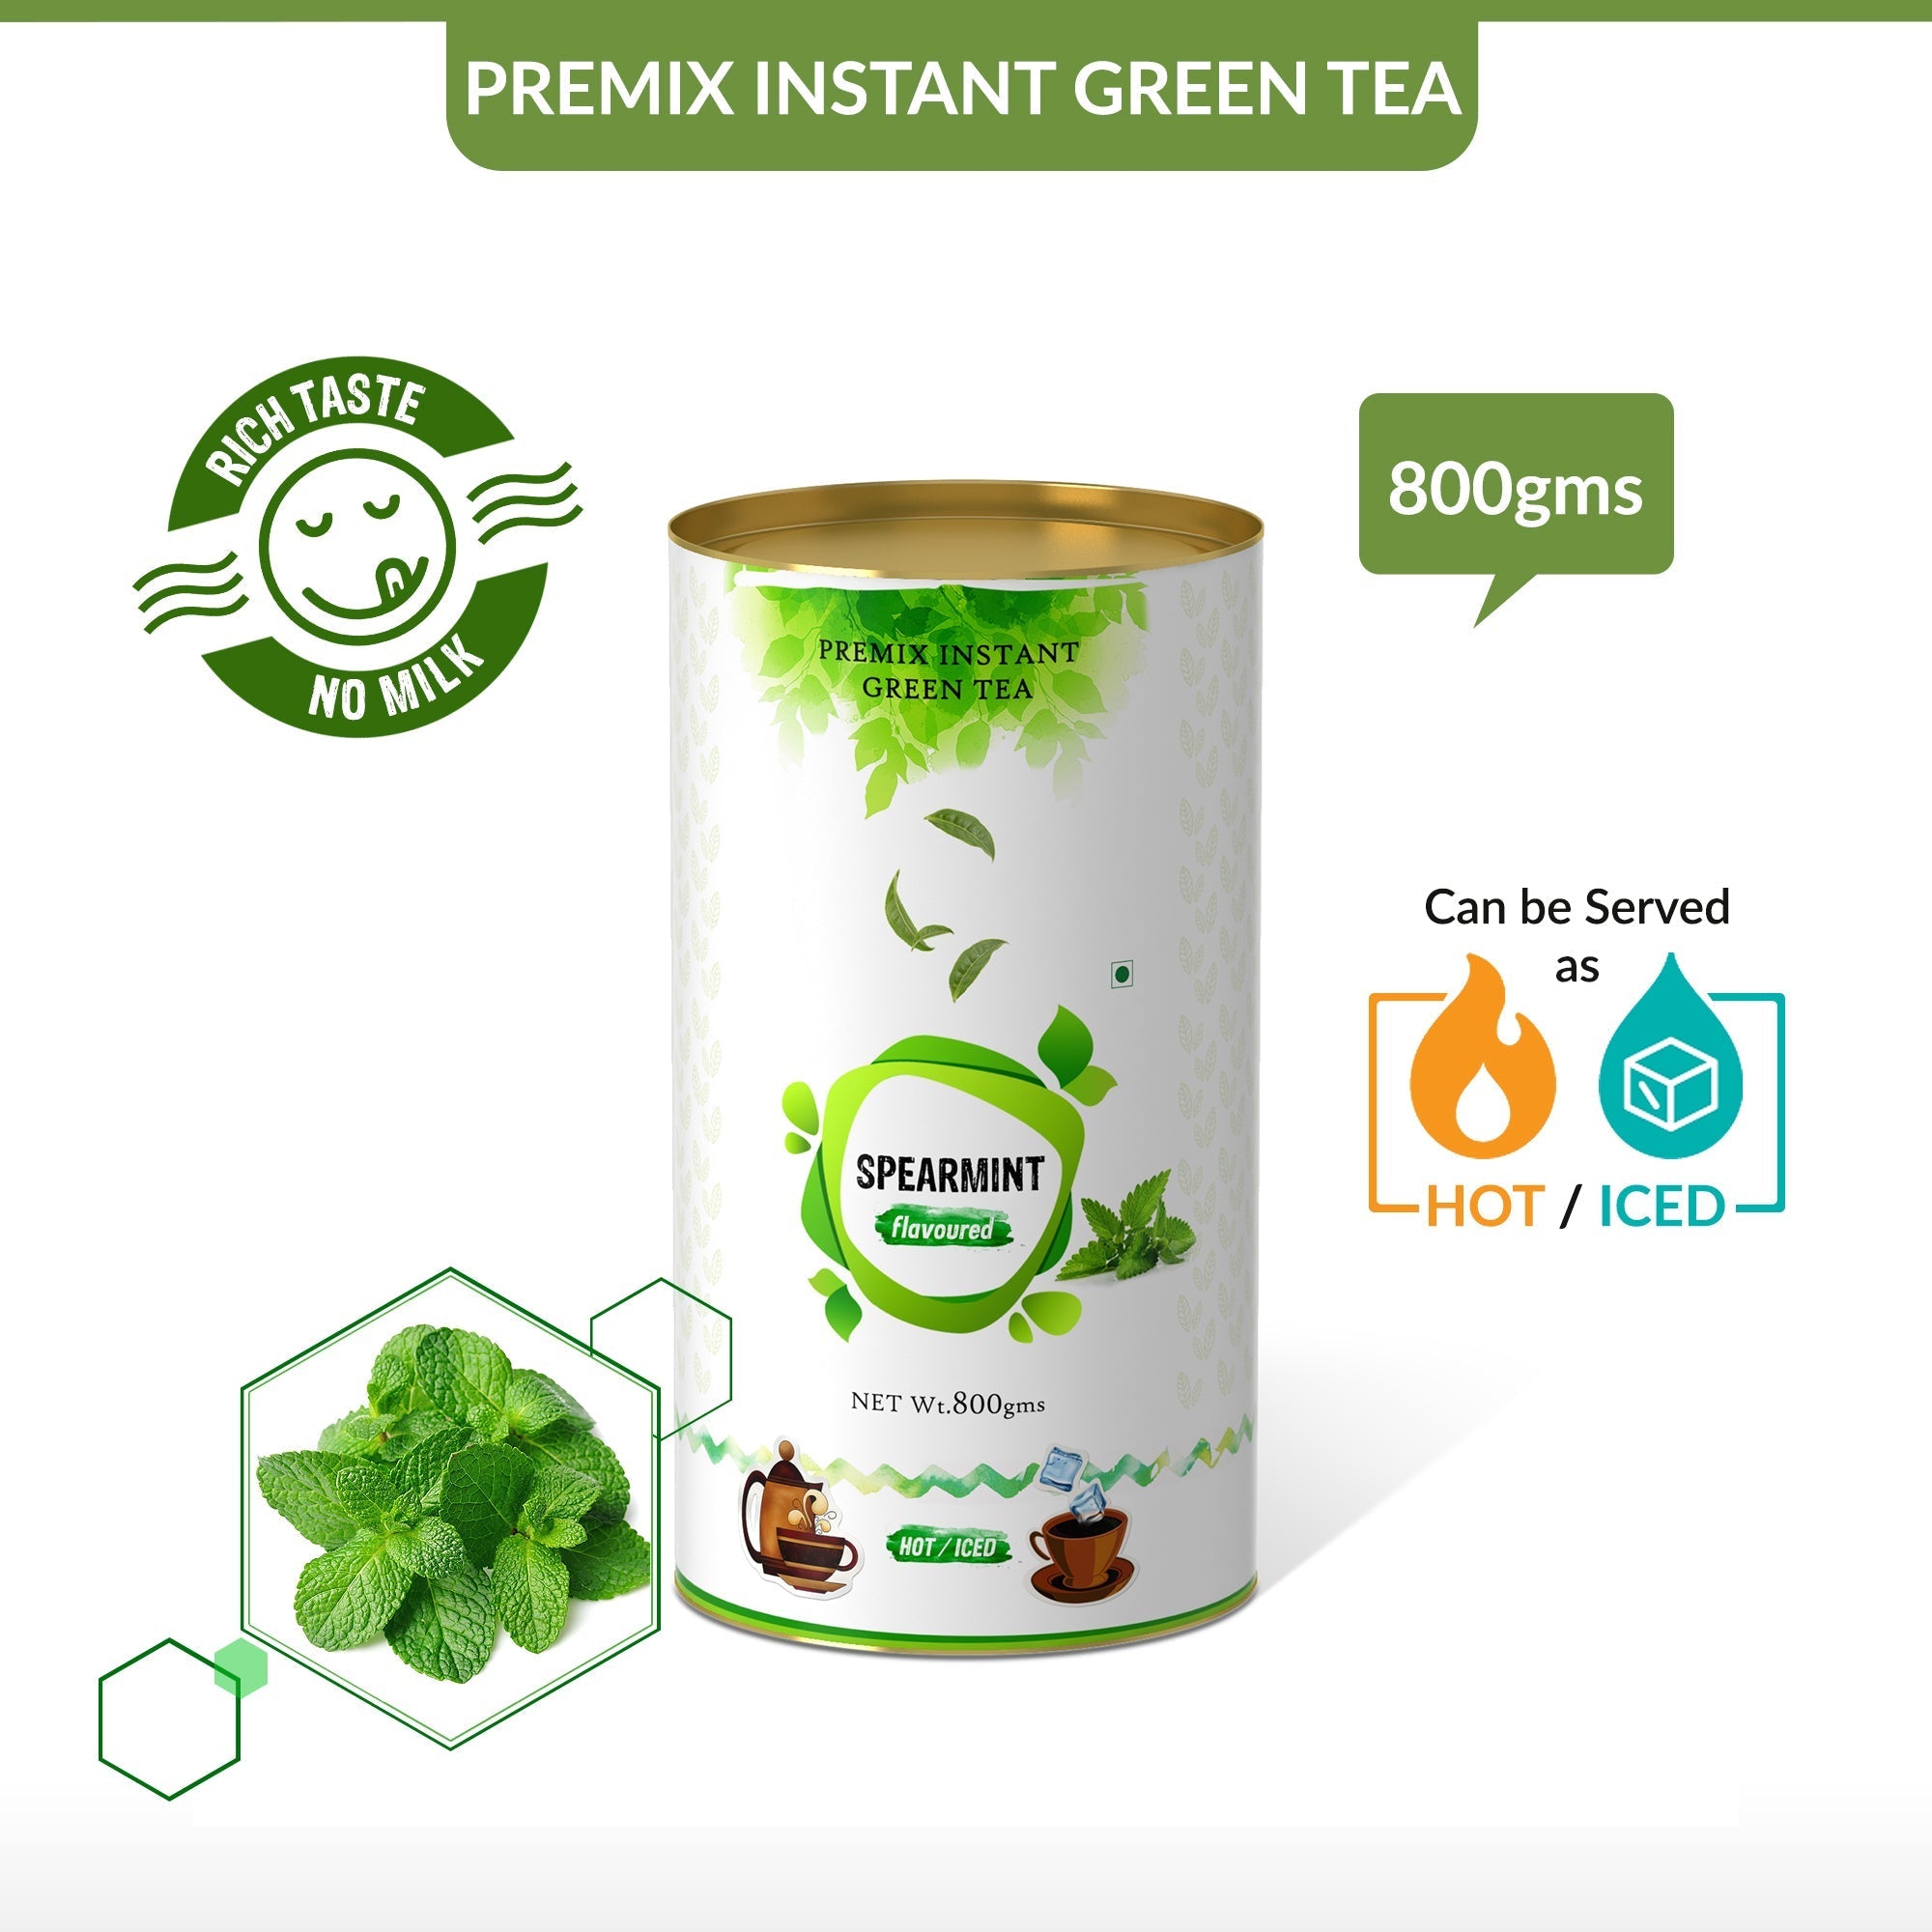 Spearmint Flavored Instant Green Tea - 800 gms